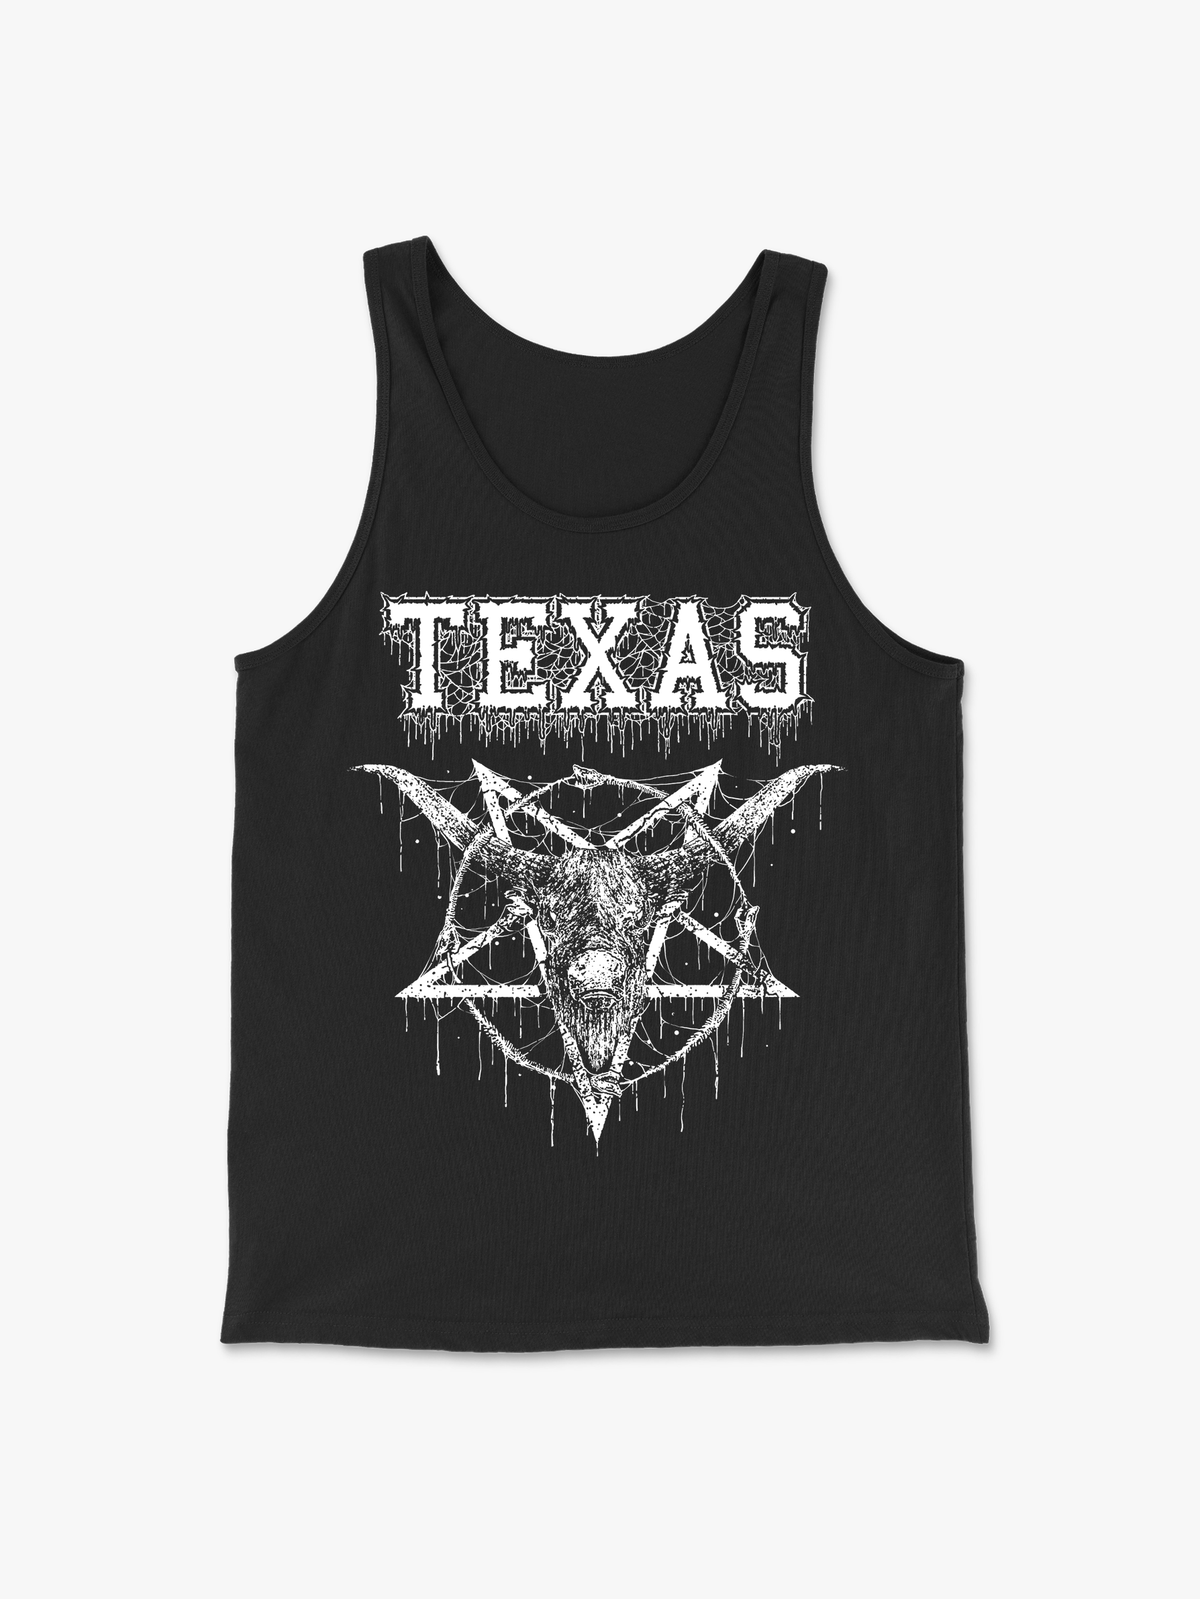 Spirit of Texas Shirt